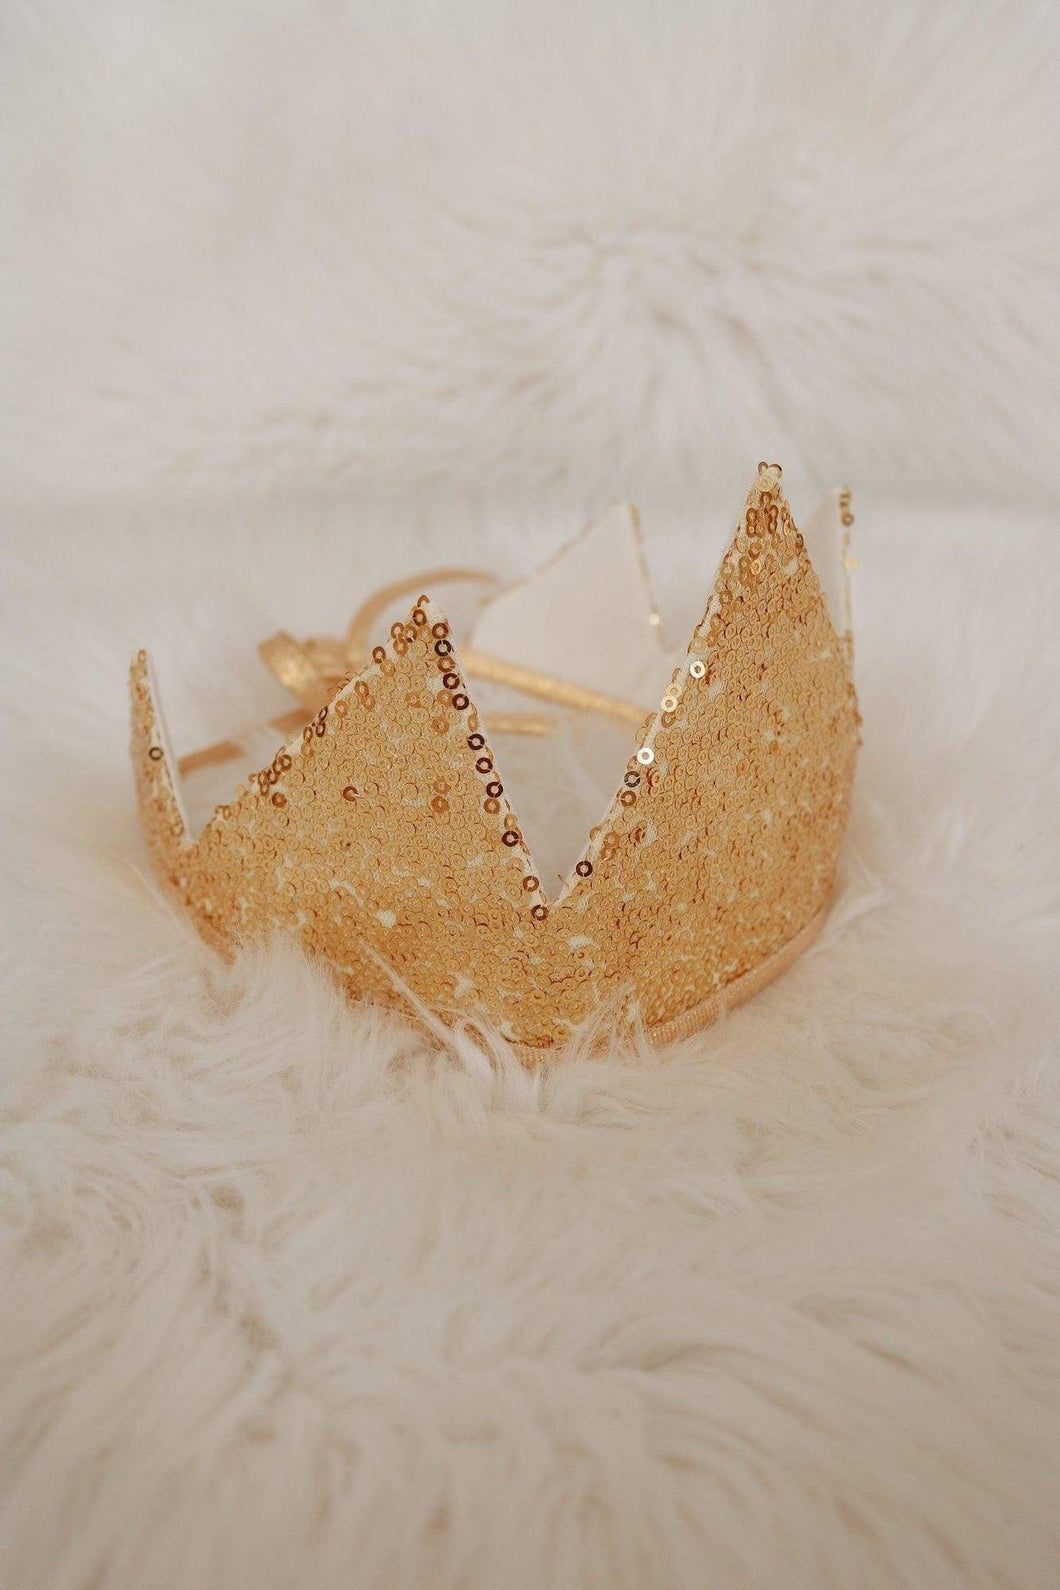 moimili.us Crown Moi Mili “Gold Sequins” Crown